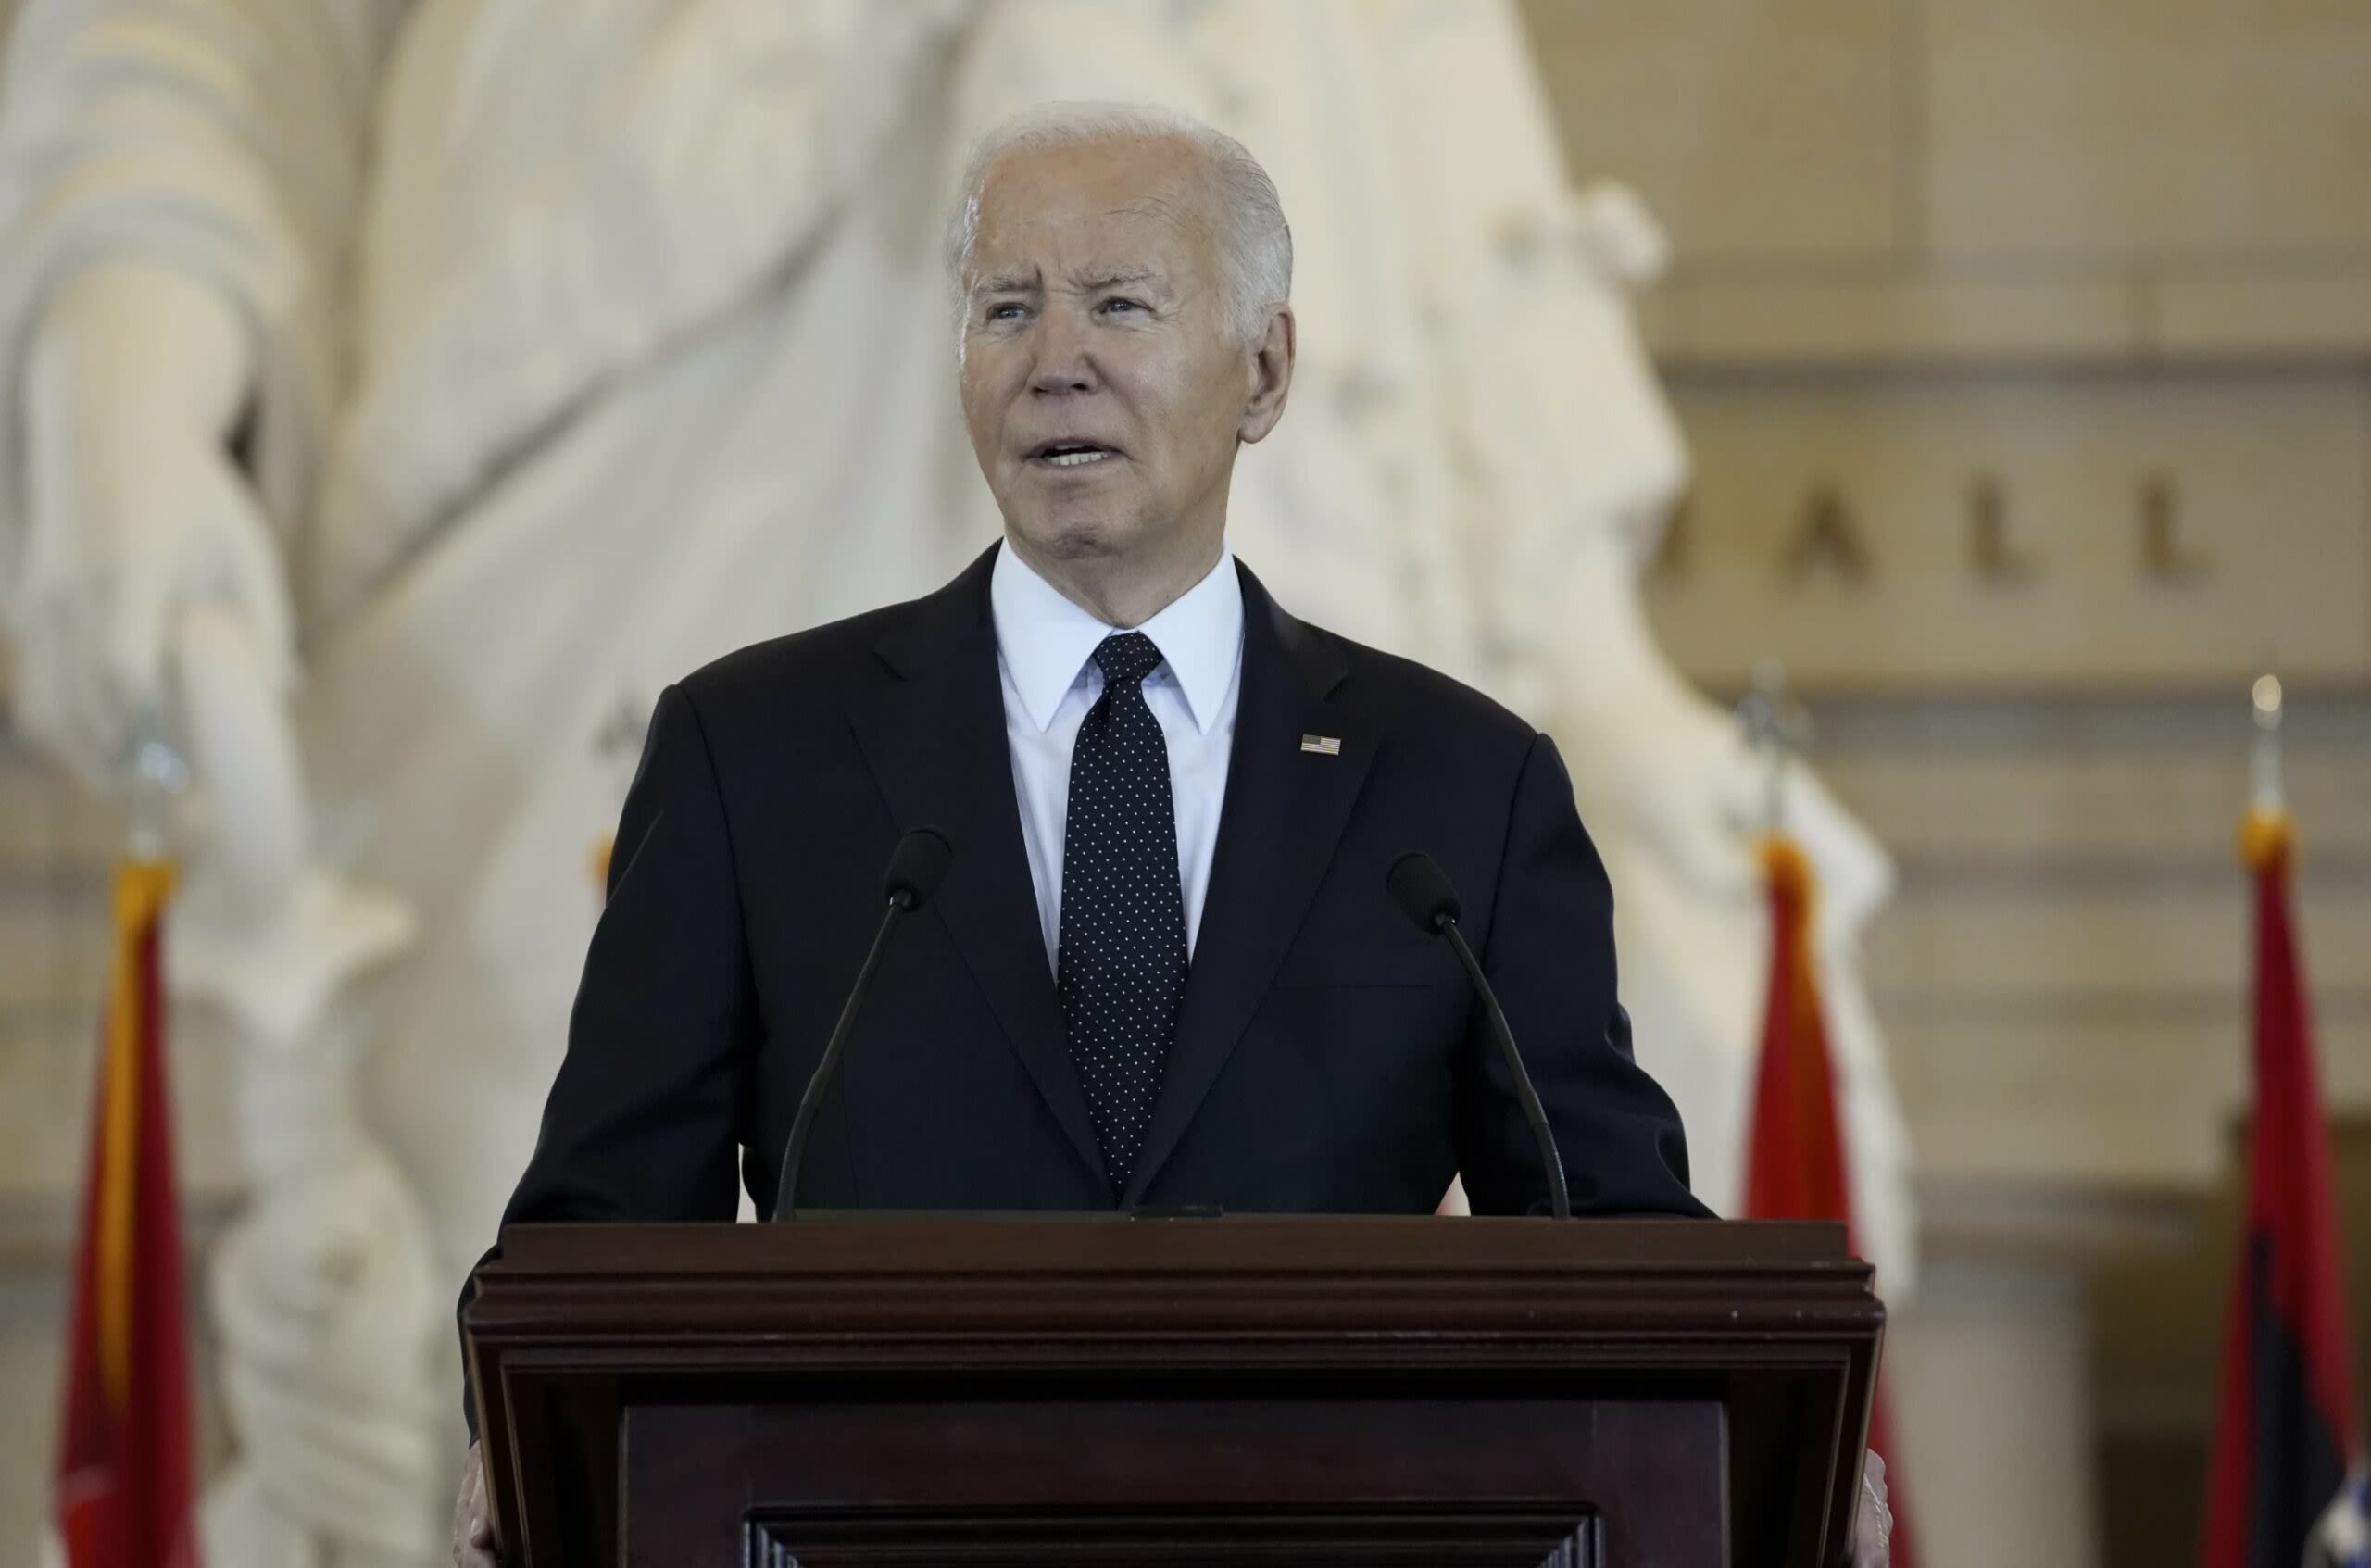 Donald Trump is still a threat to democracy, Joe Biden's campaign says